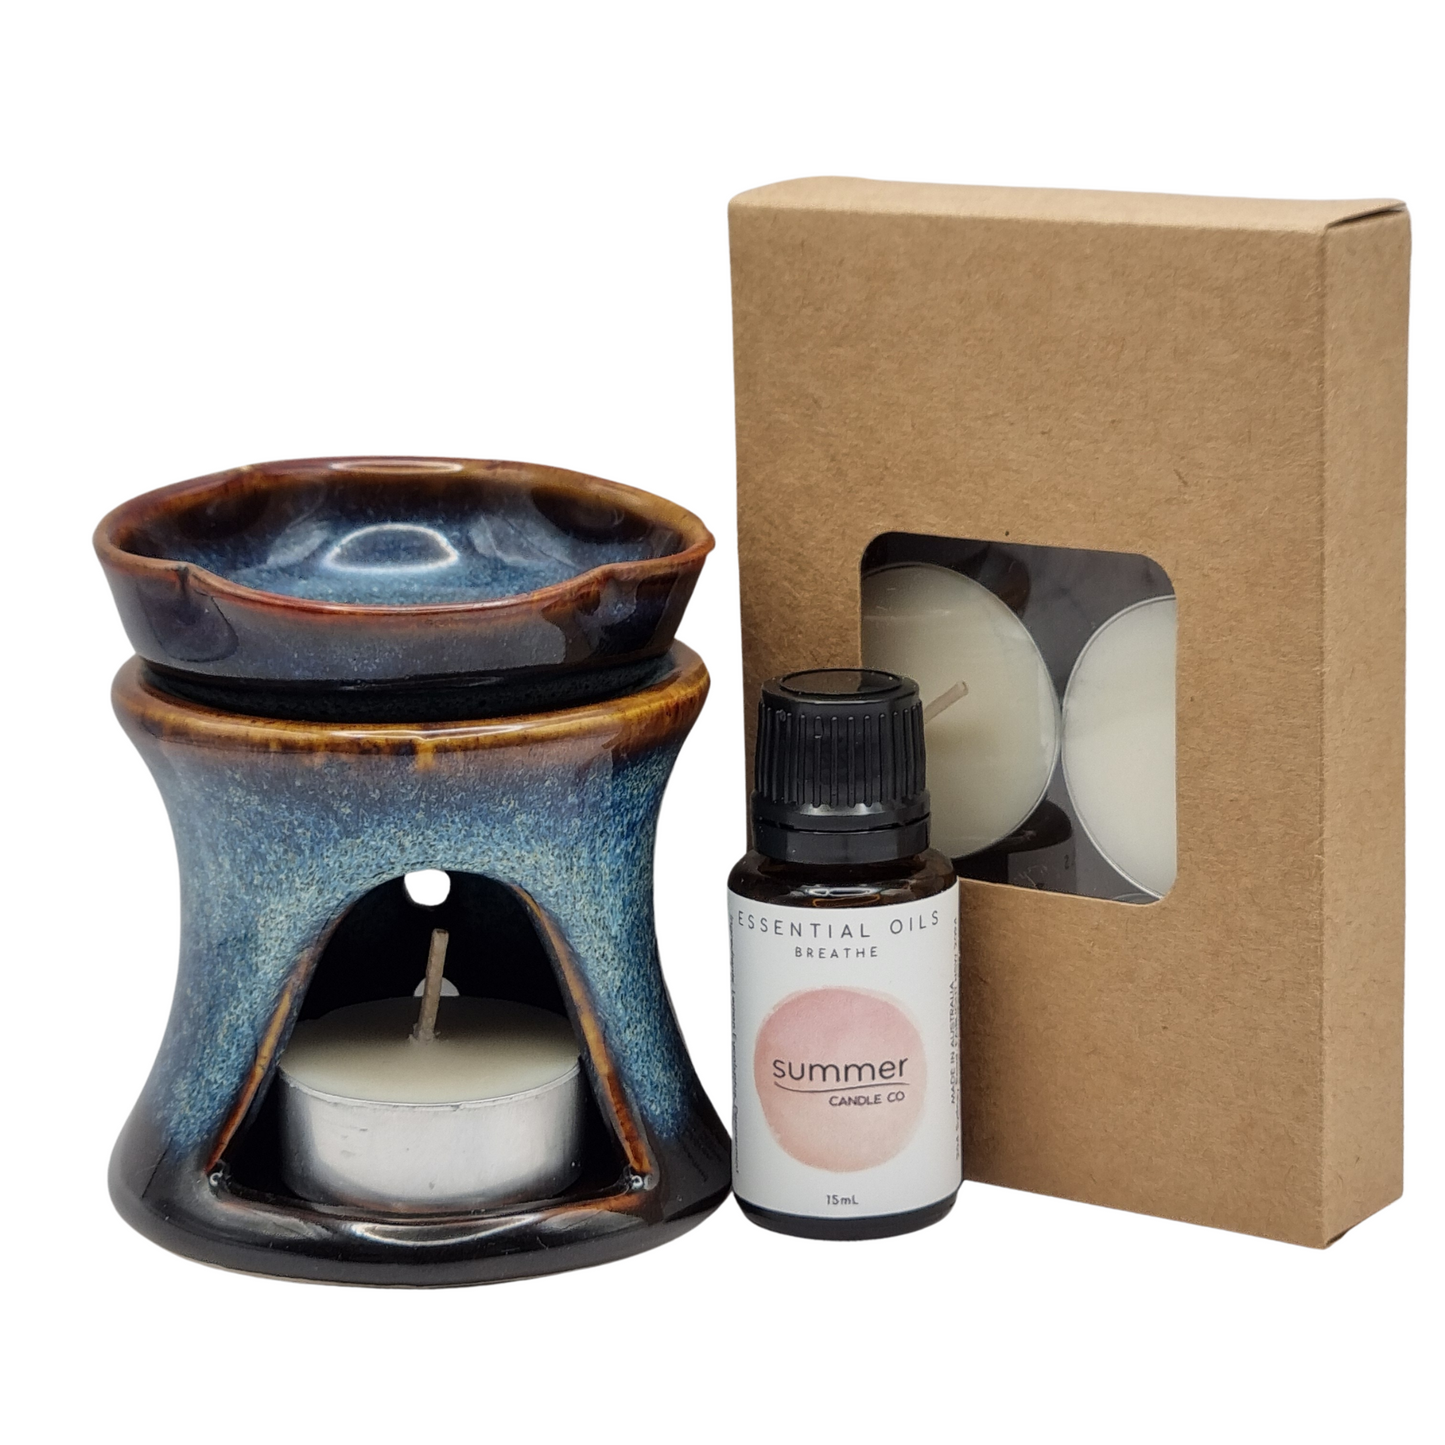 Bundle Pack Ceramic Blue Oil Burner with Breathe Essential Oil and 6 pack of Tealights